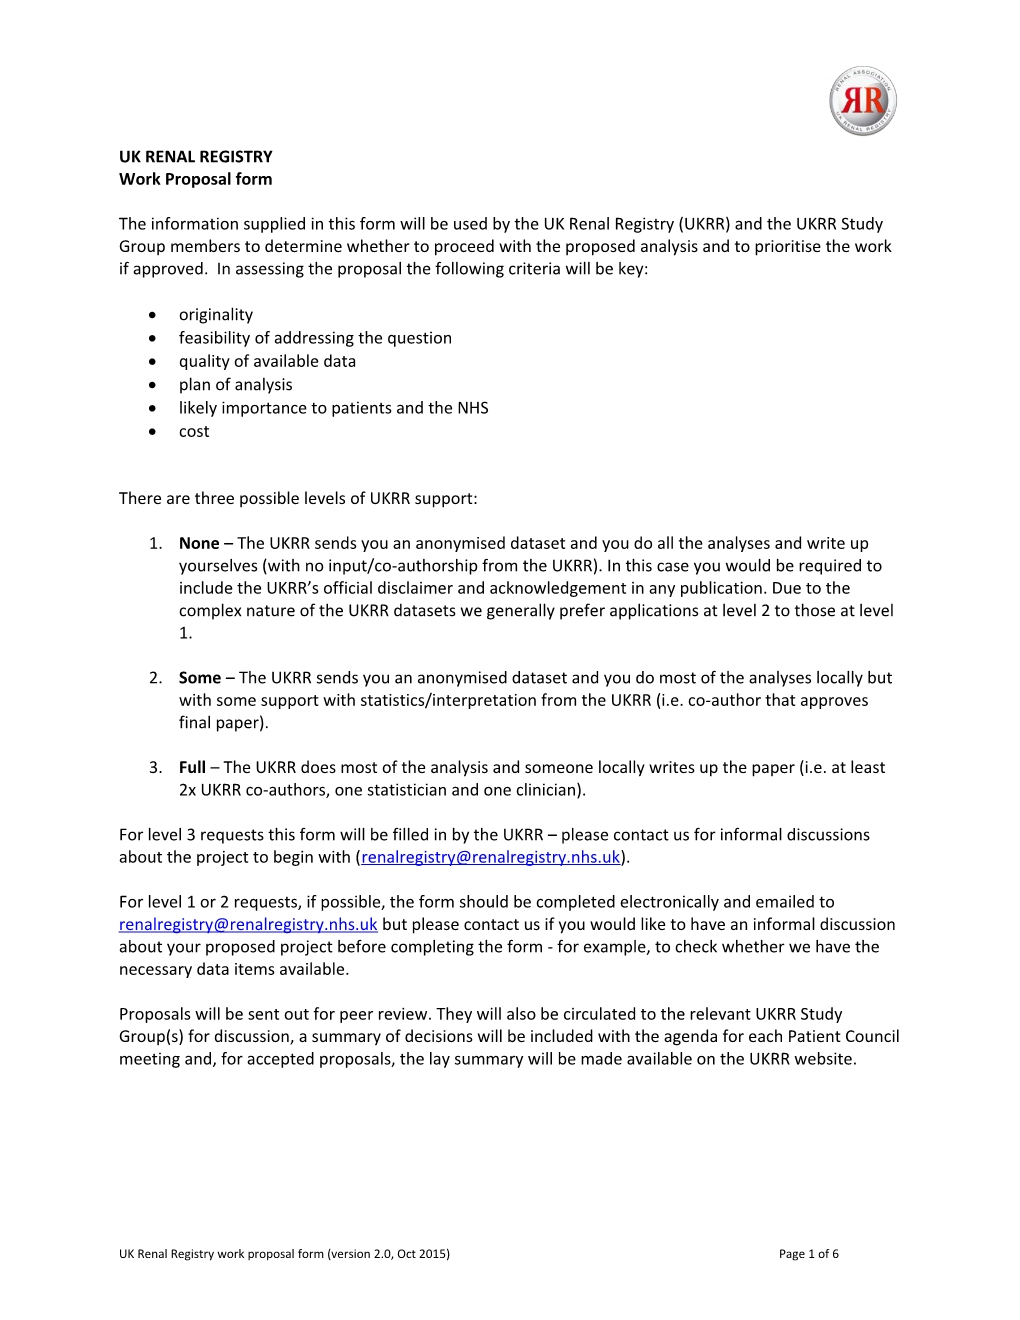 UK RENAL REGISTRY Workproposal Form